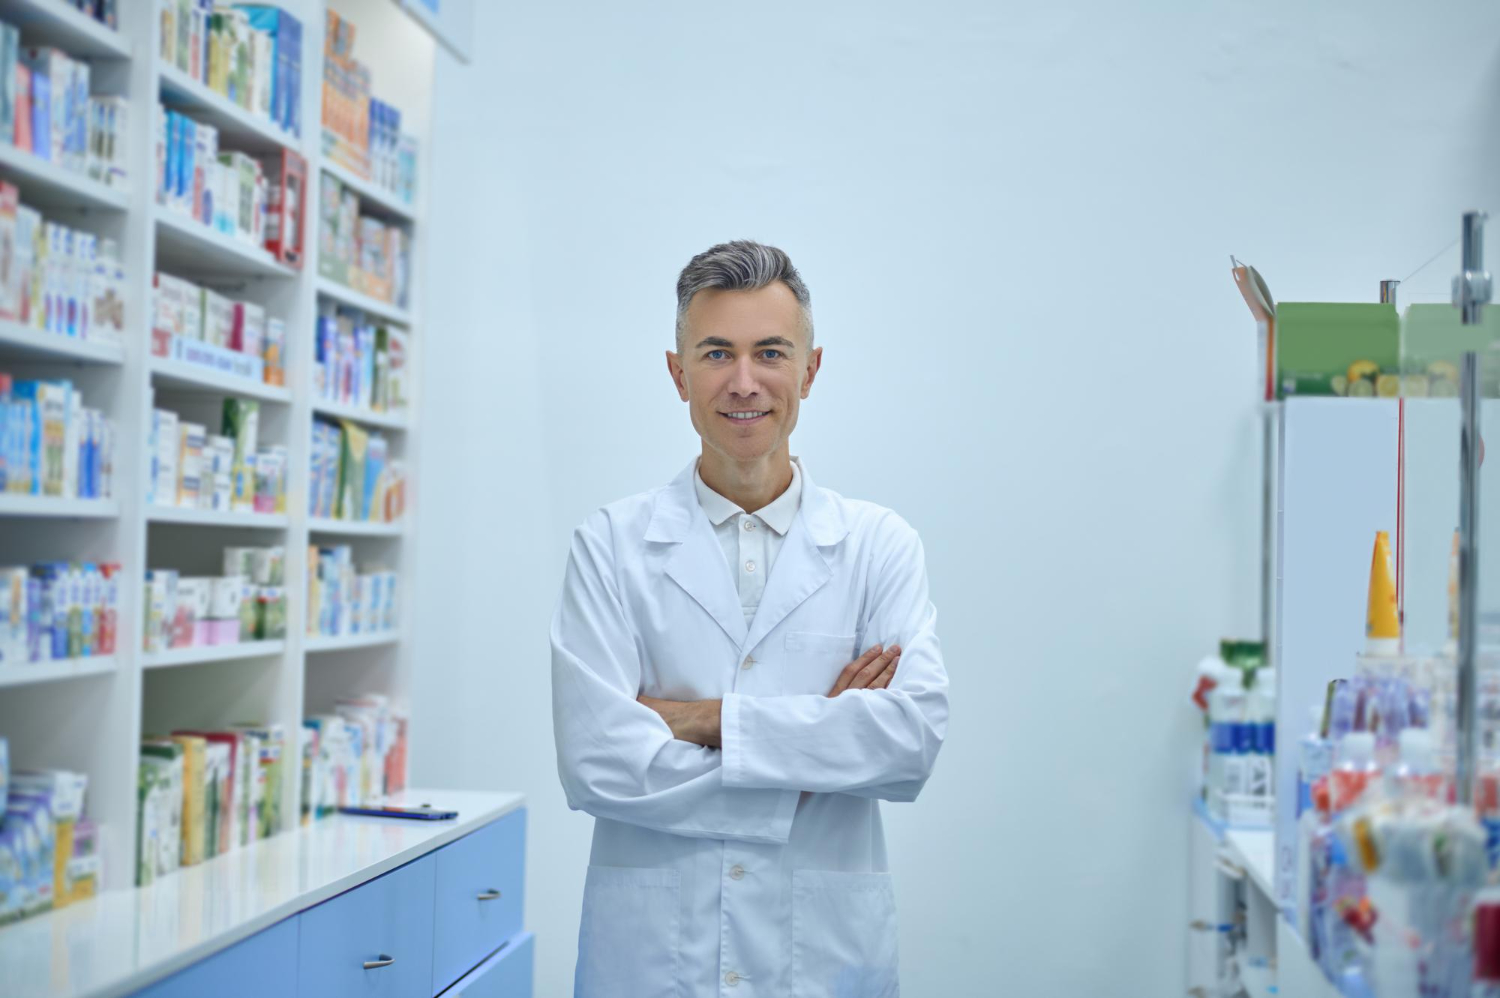 farmacia-hombre-bata-laboratorio-pie-cerca-estantes-medicamentos